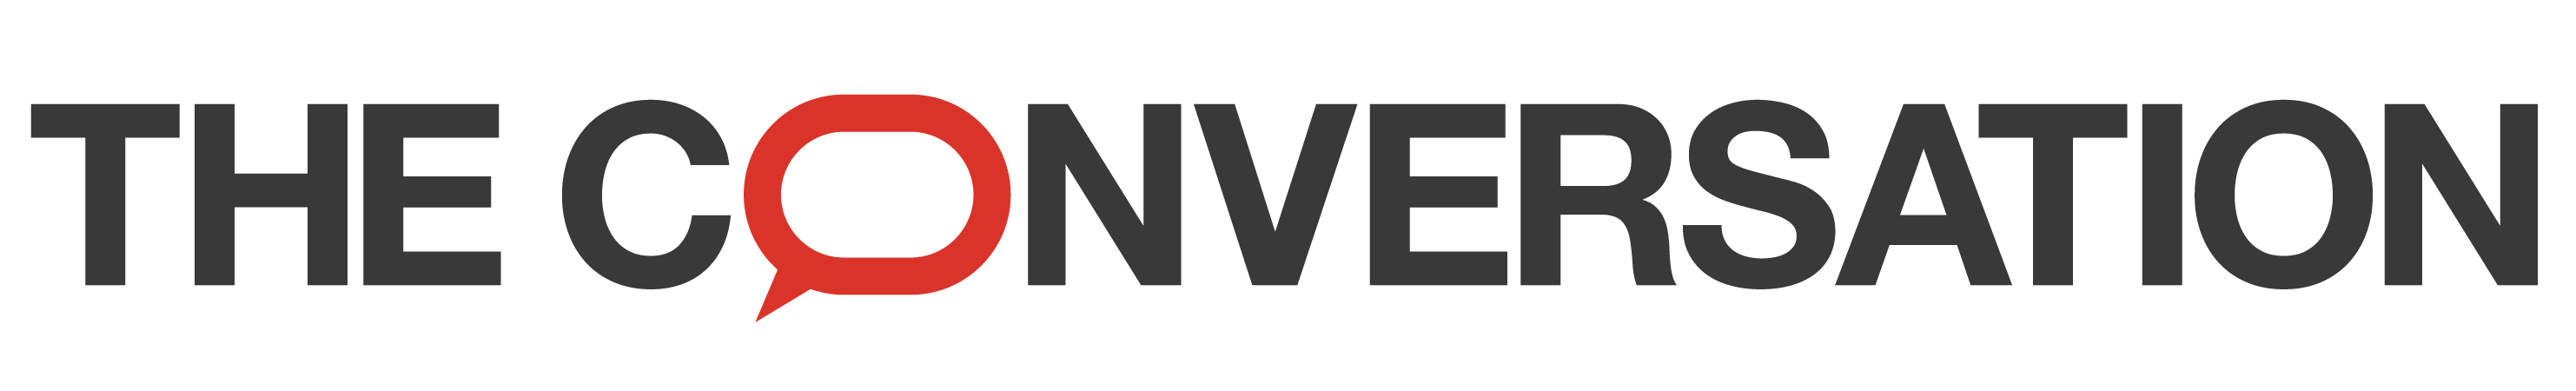 the conversation logo horizontal